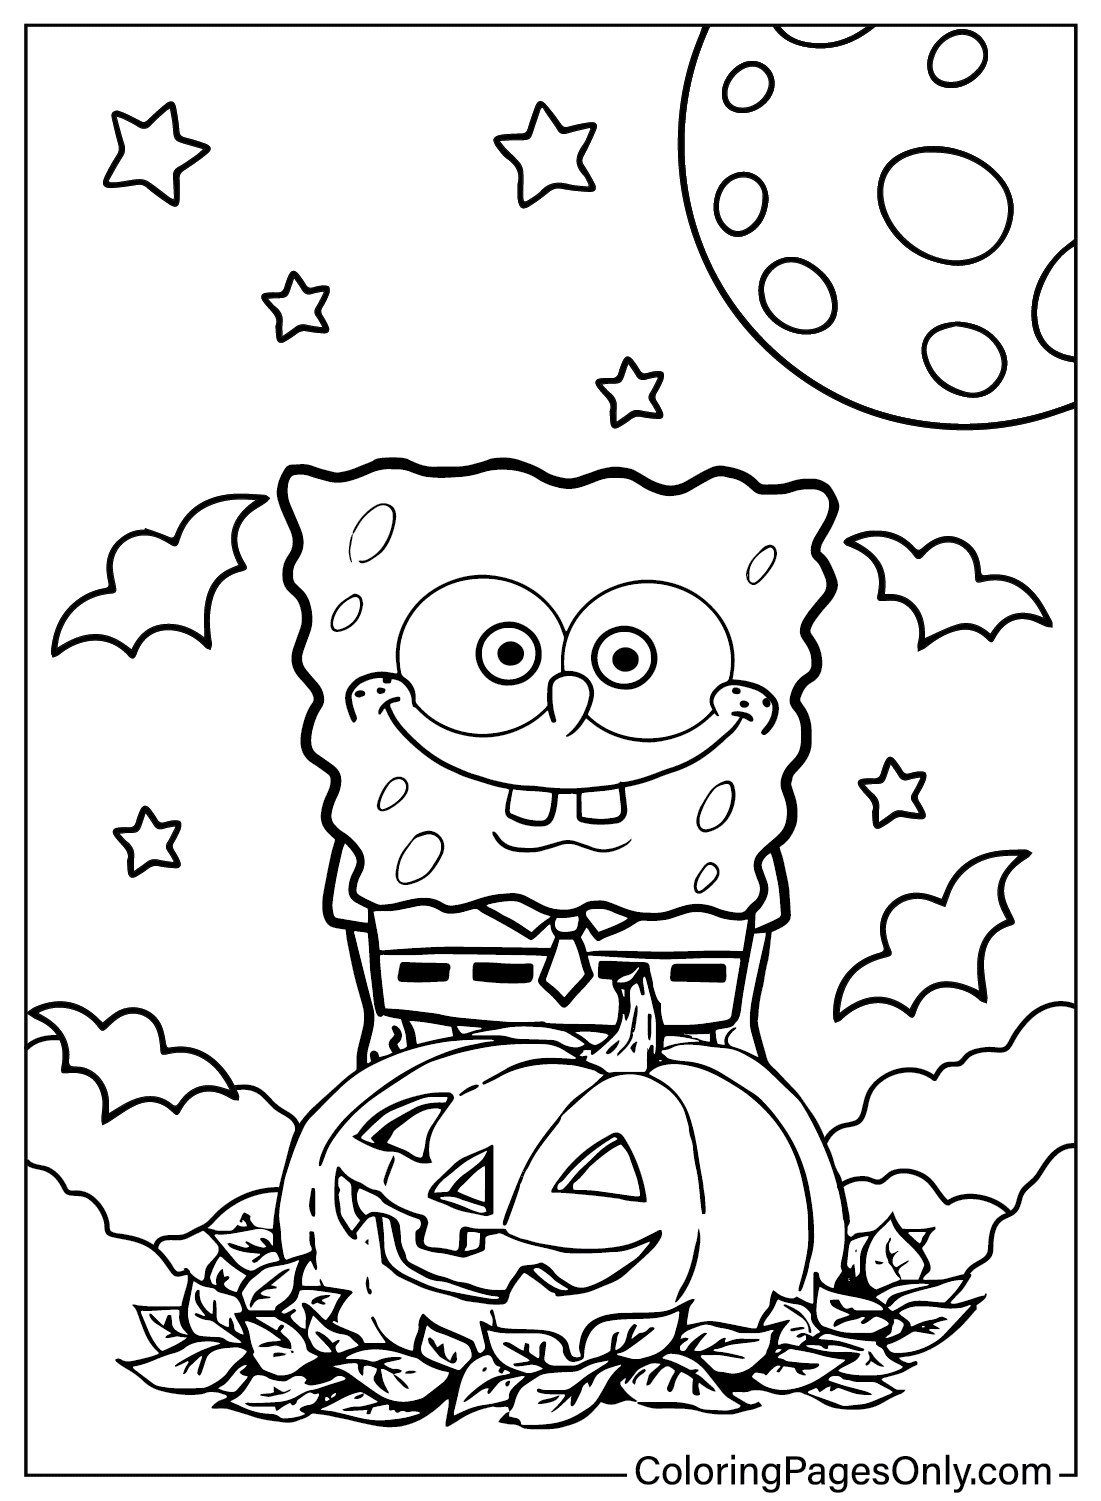 22 Free Printable Spongebob Halloween Coloring Pages